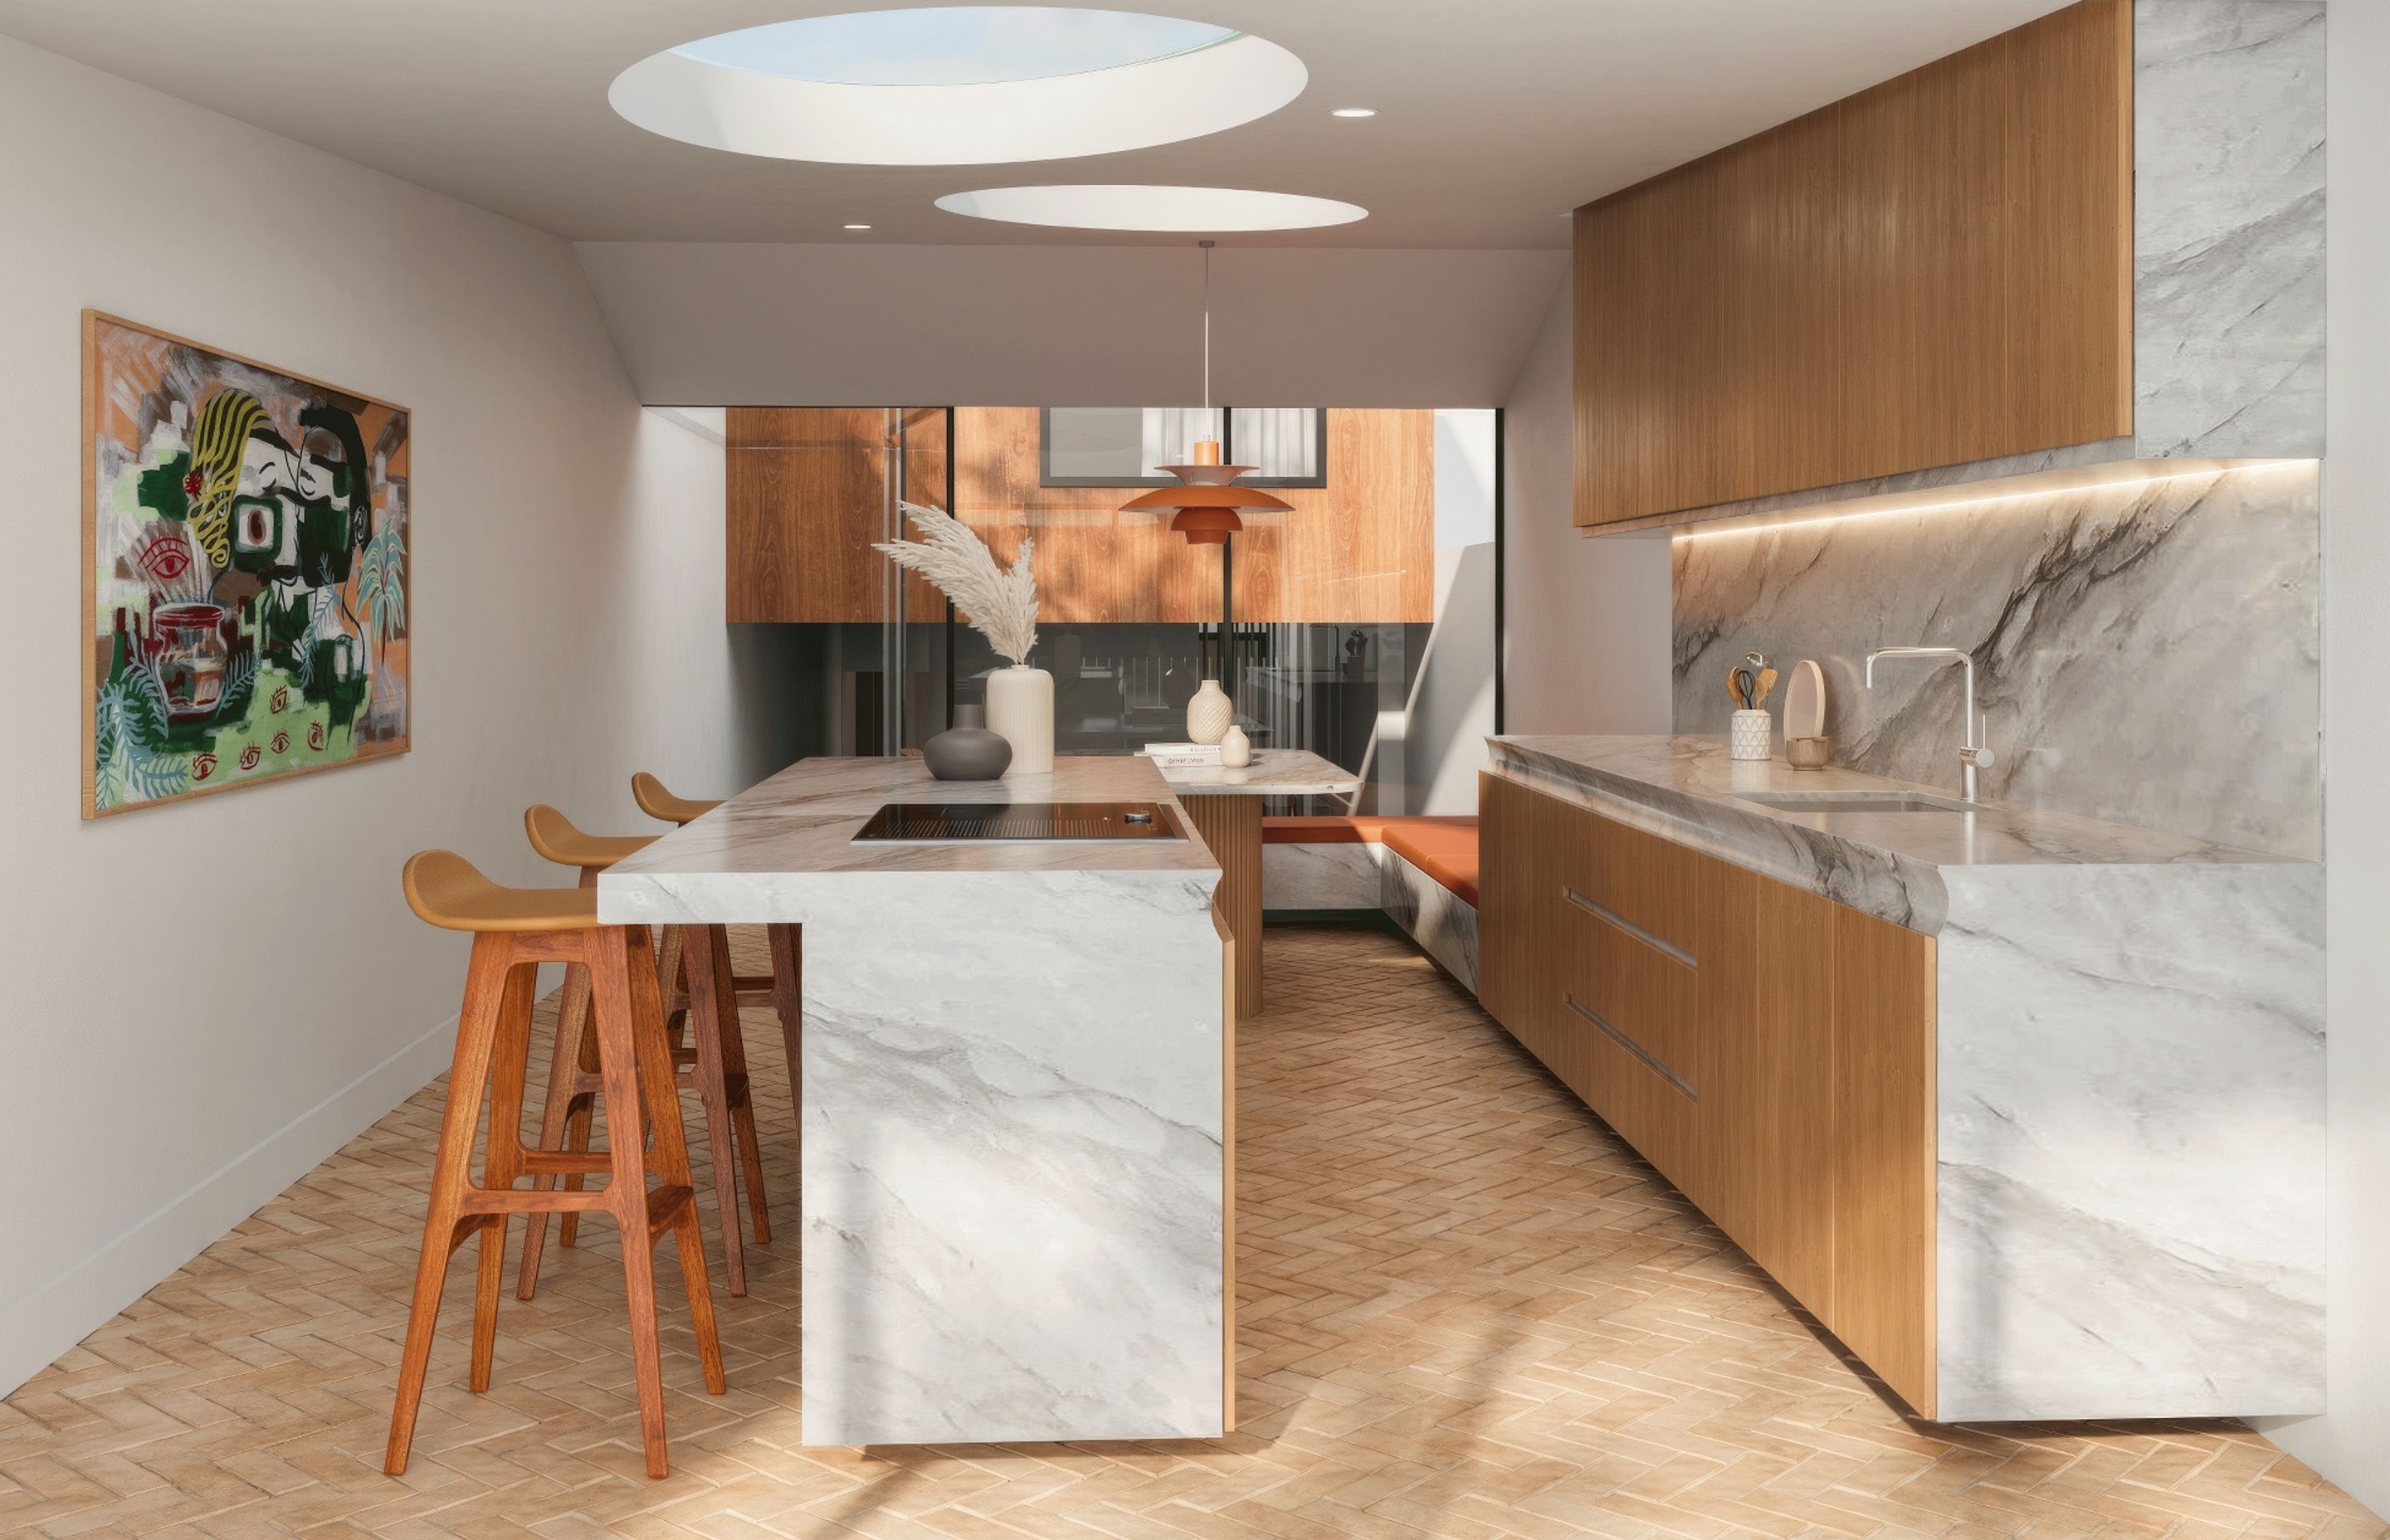 thorpe-house-project-kitchen-gigapixel-high-fidelity-1950w.jpeg